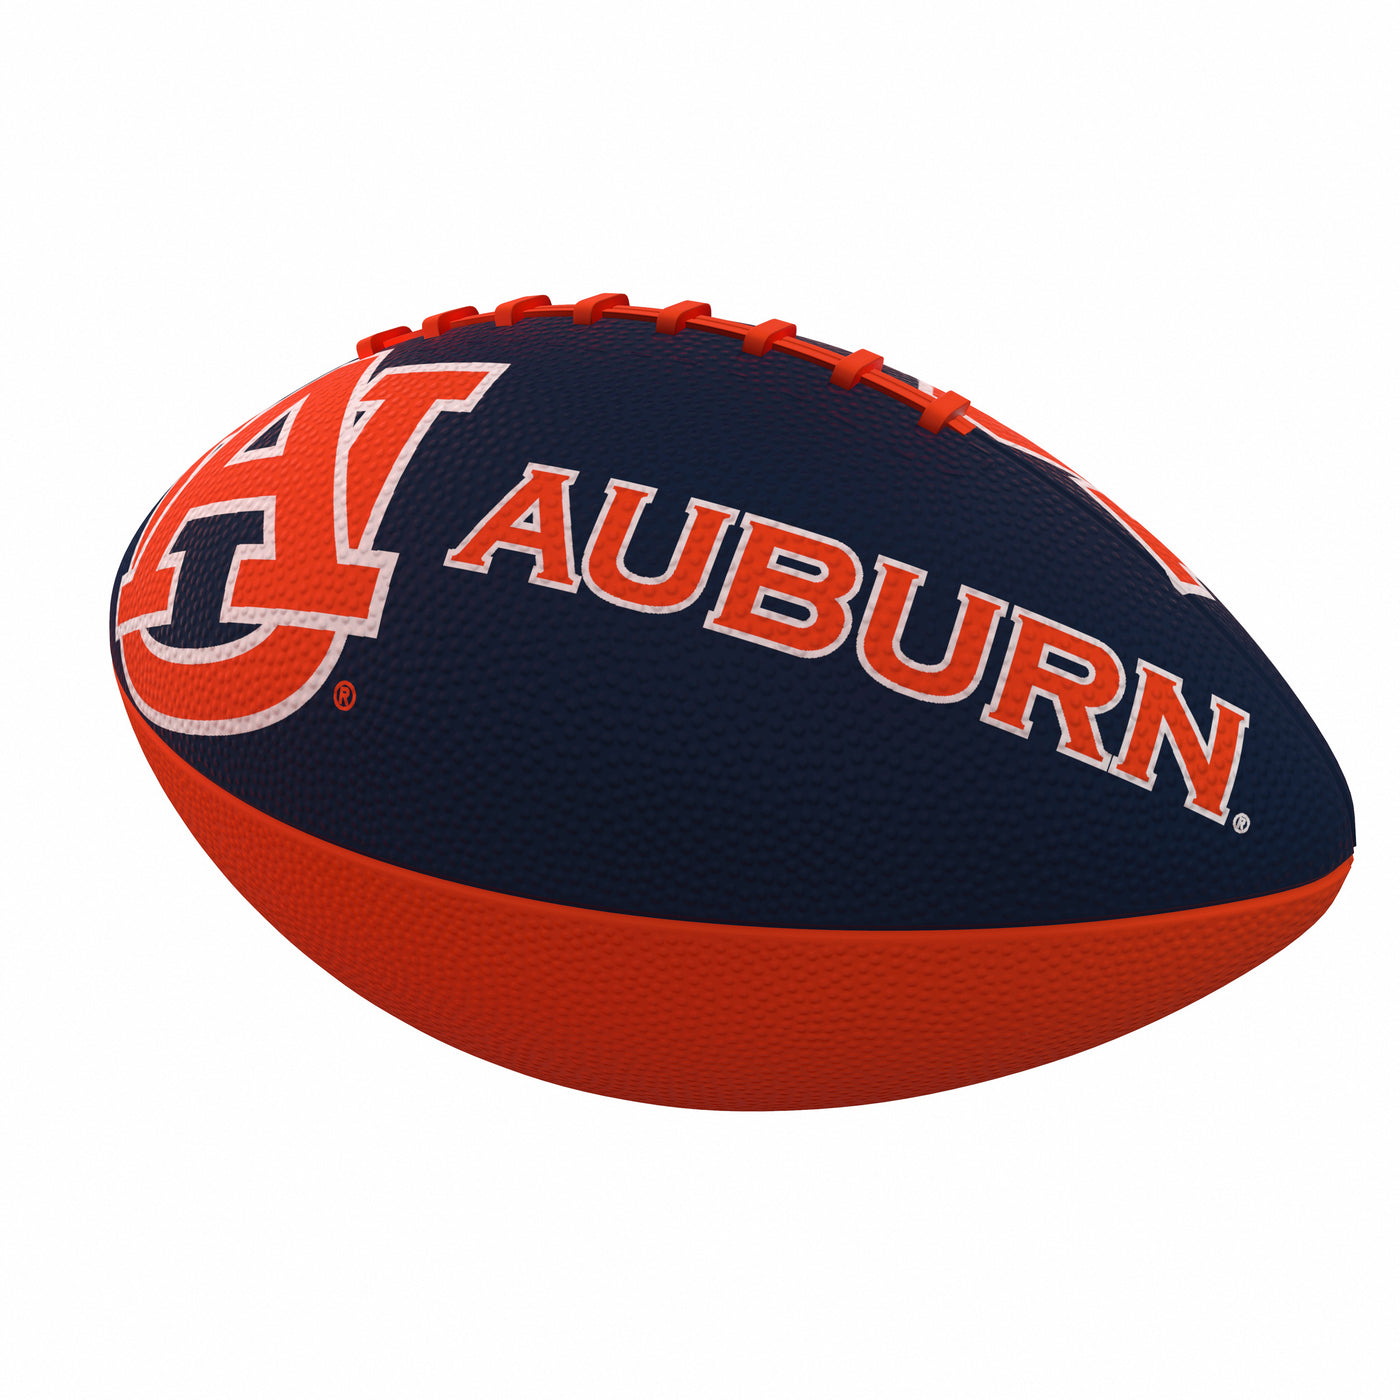 Auburn Combo Logo Junior-Size Rubber Football